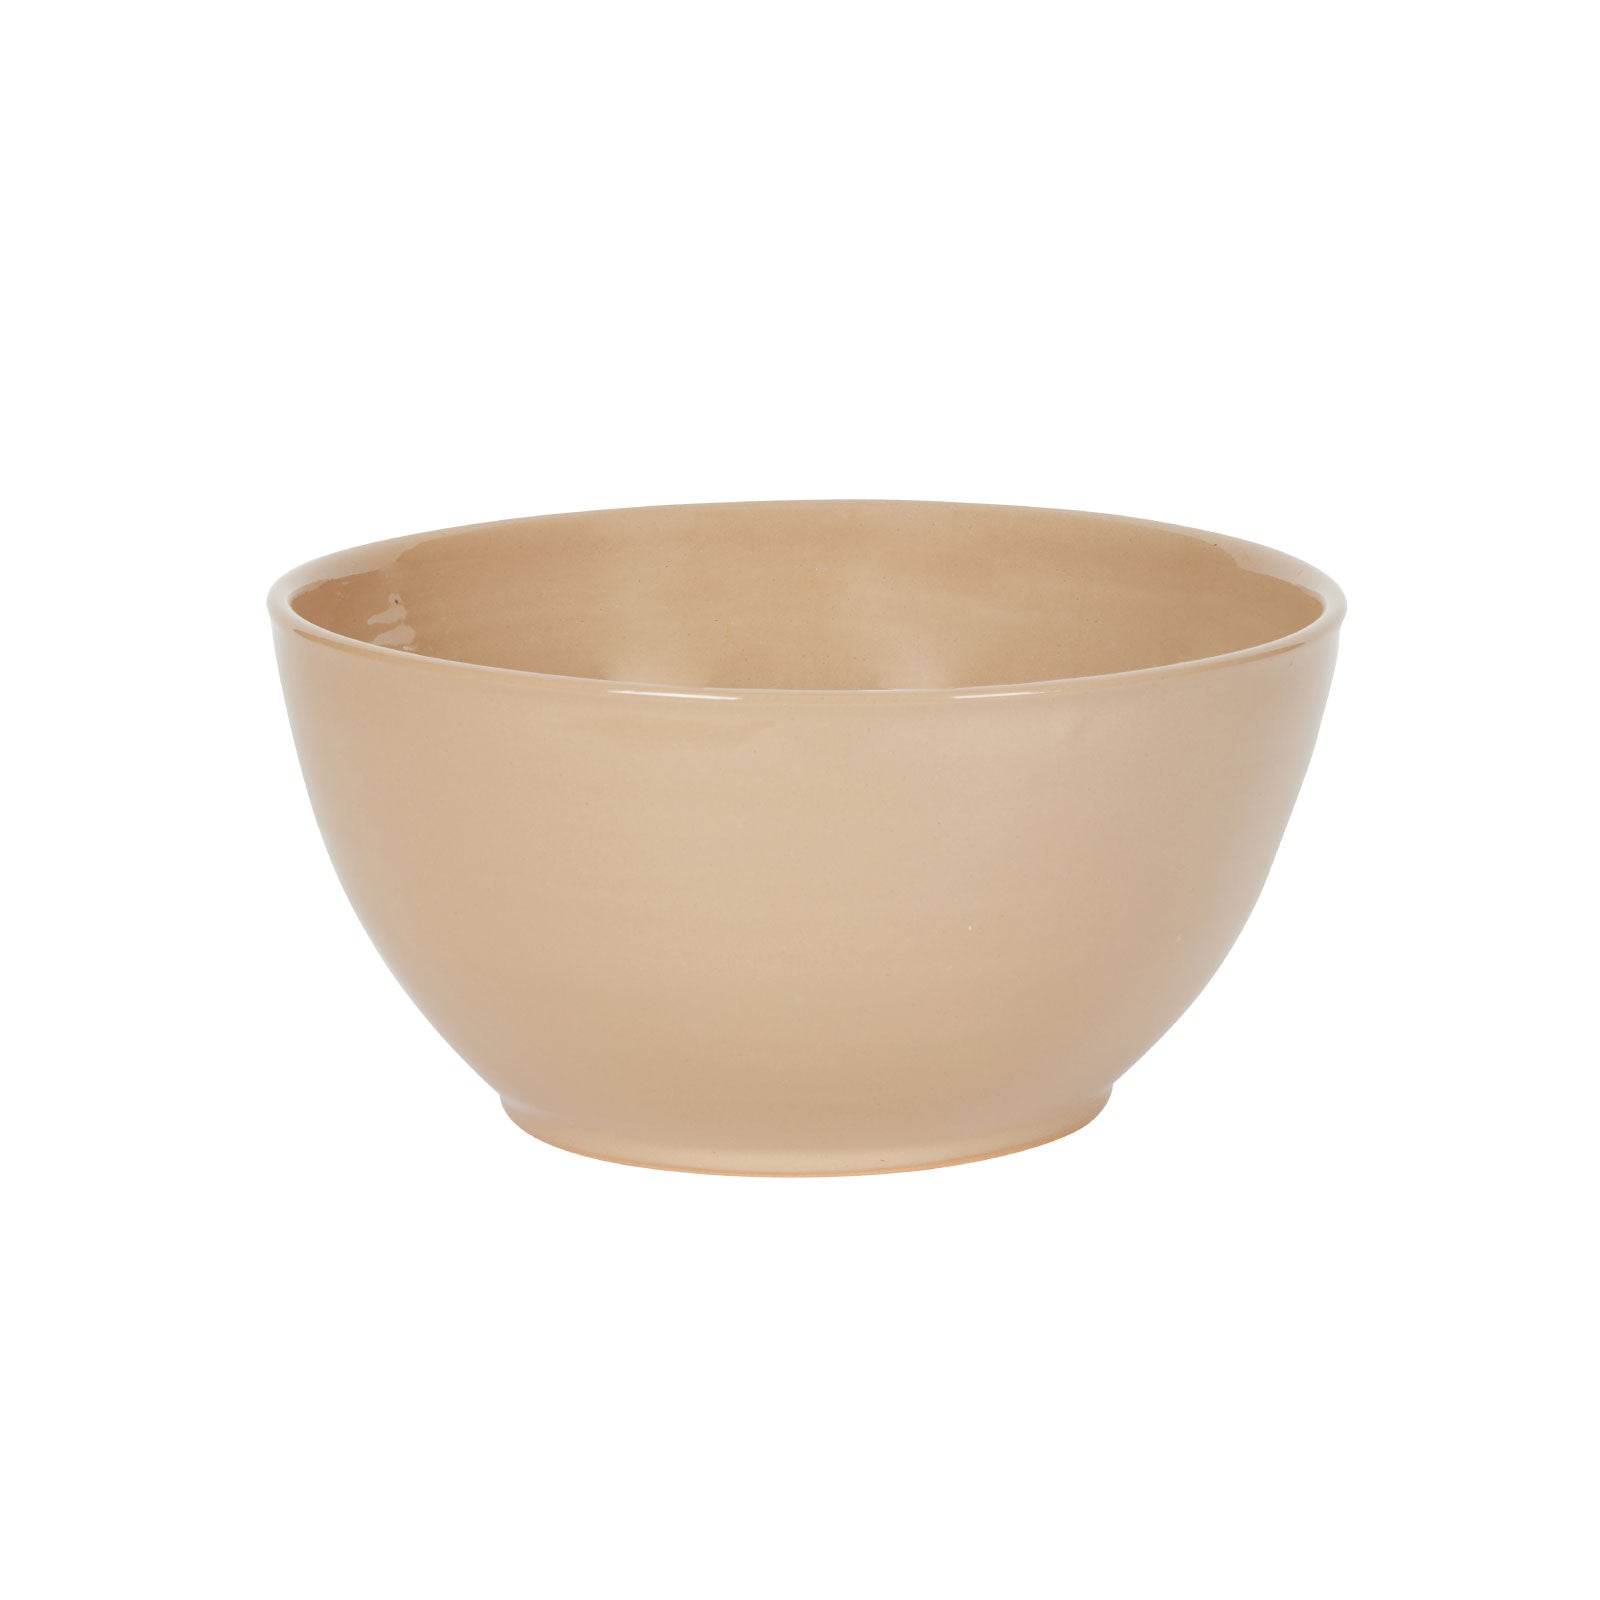 BH x etúHOME Large Ceramic Stacking Bowl in Natural